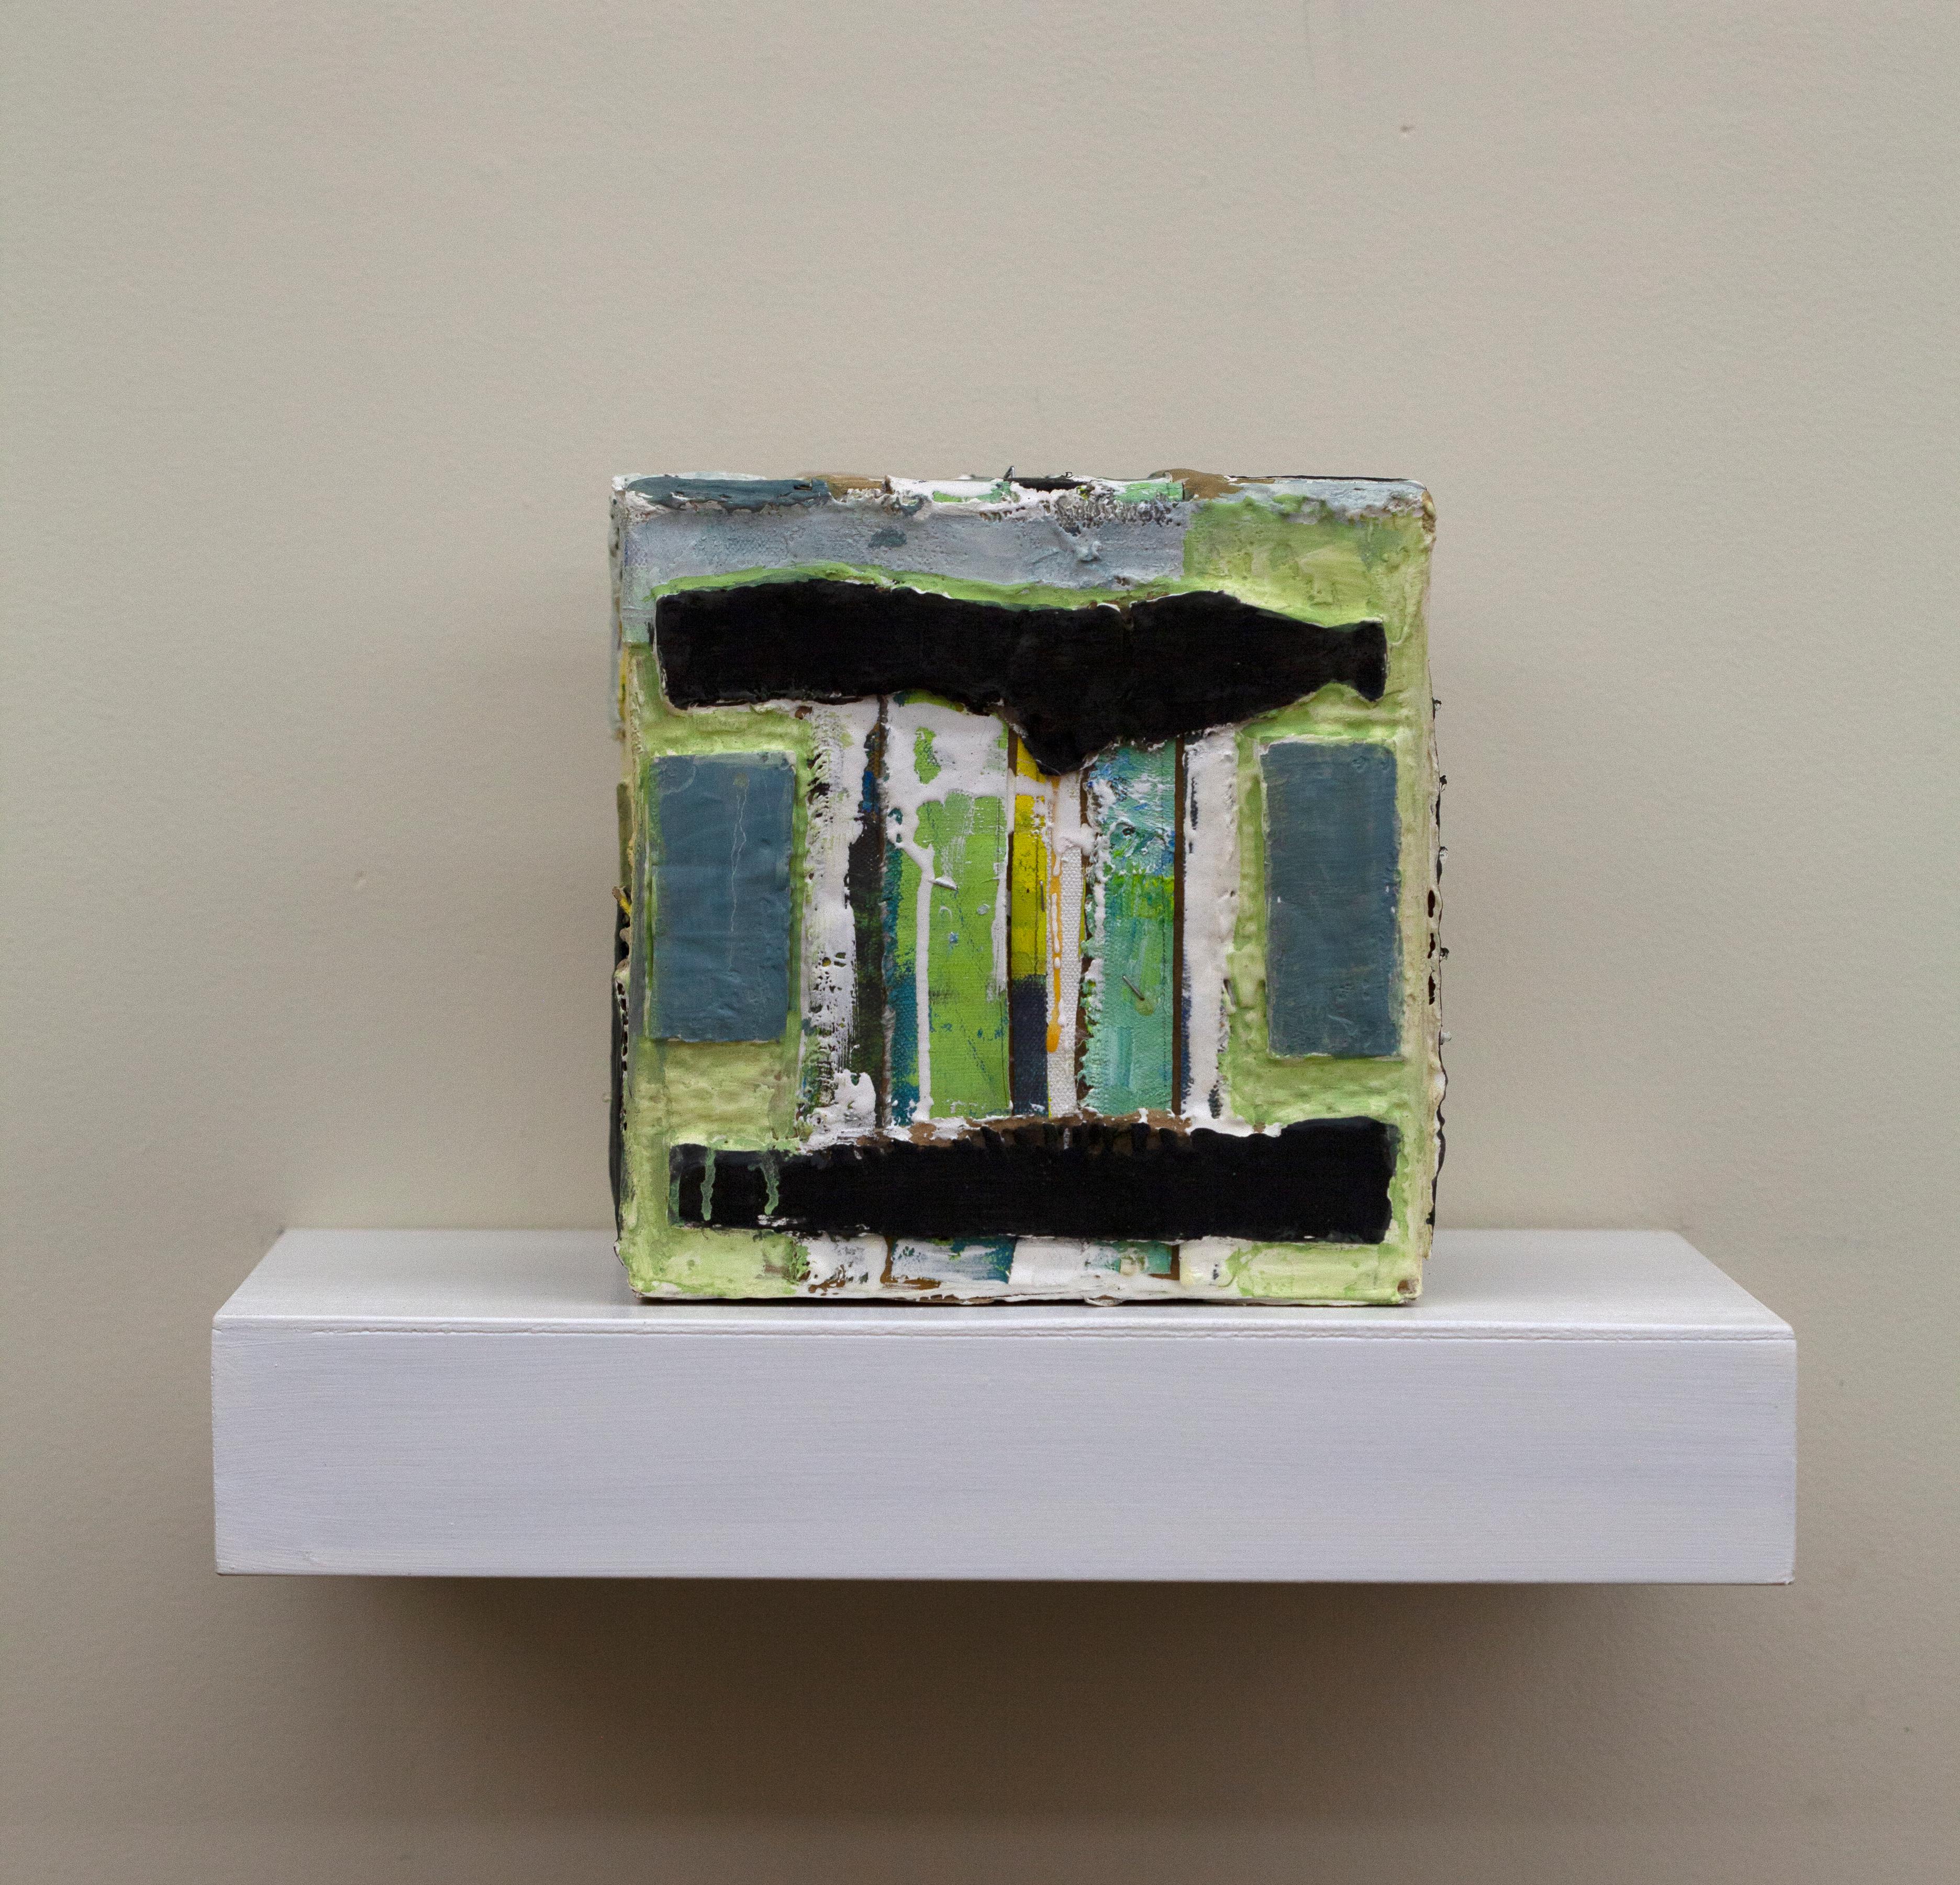 John McCaw Abstract Sculpture - "Box 4" Mixed Media Sculpture